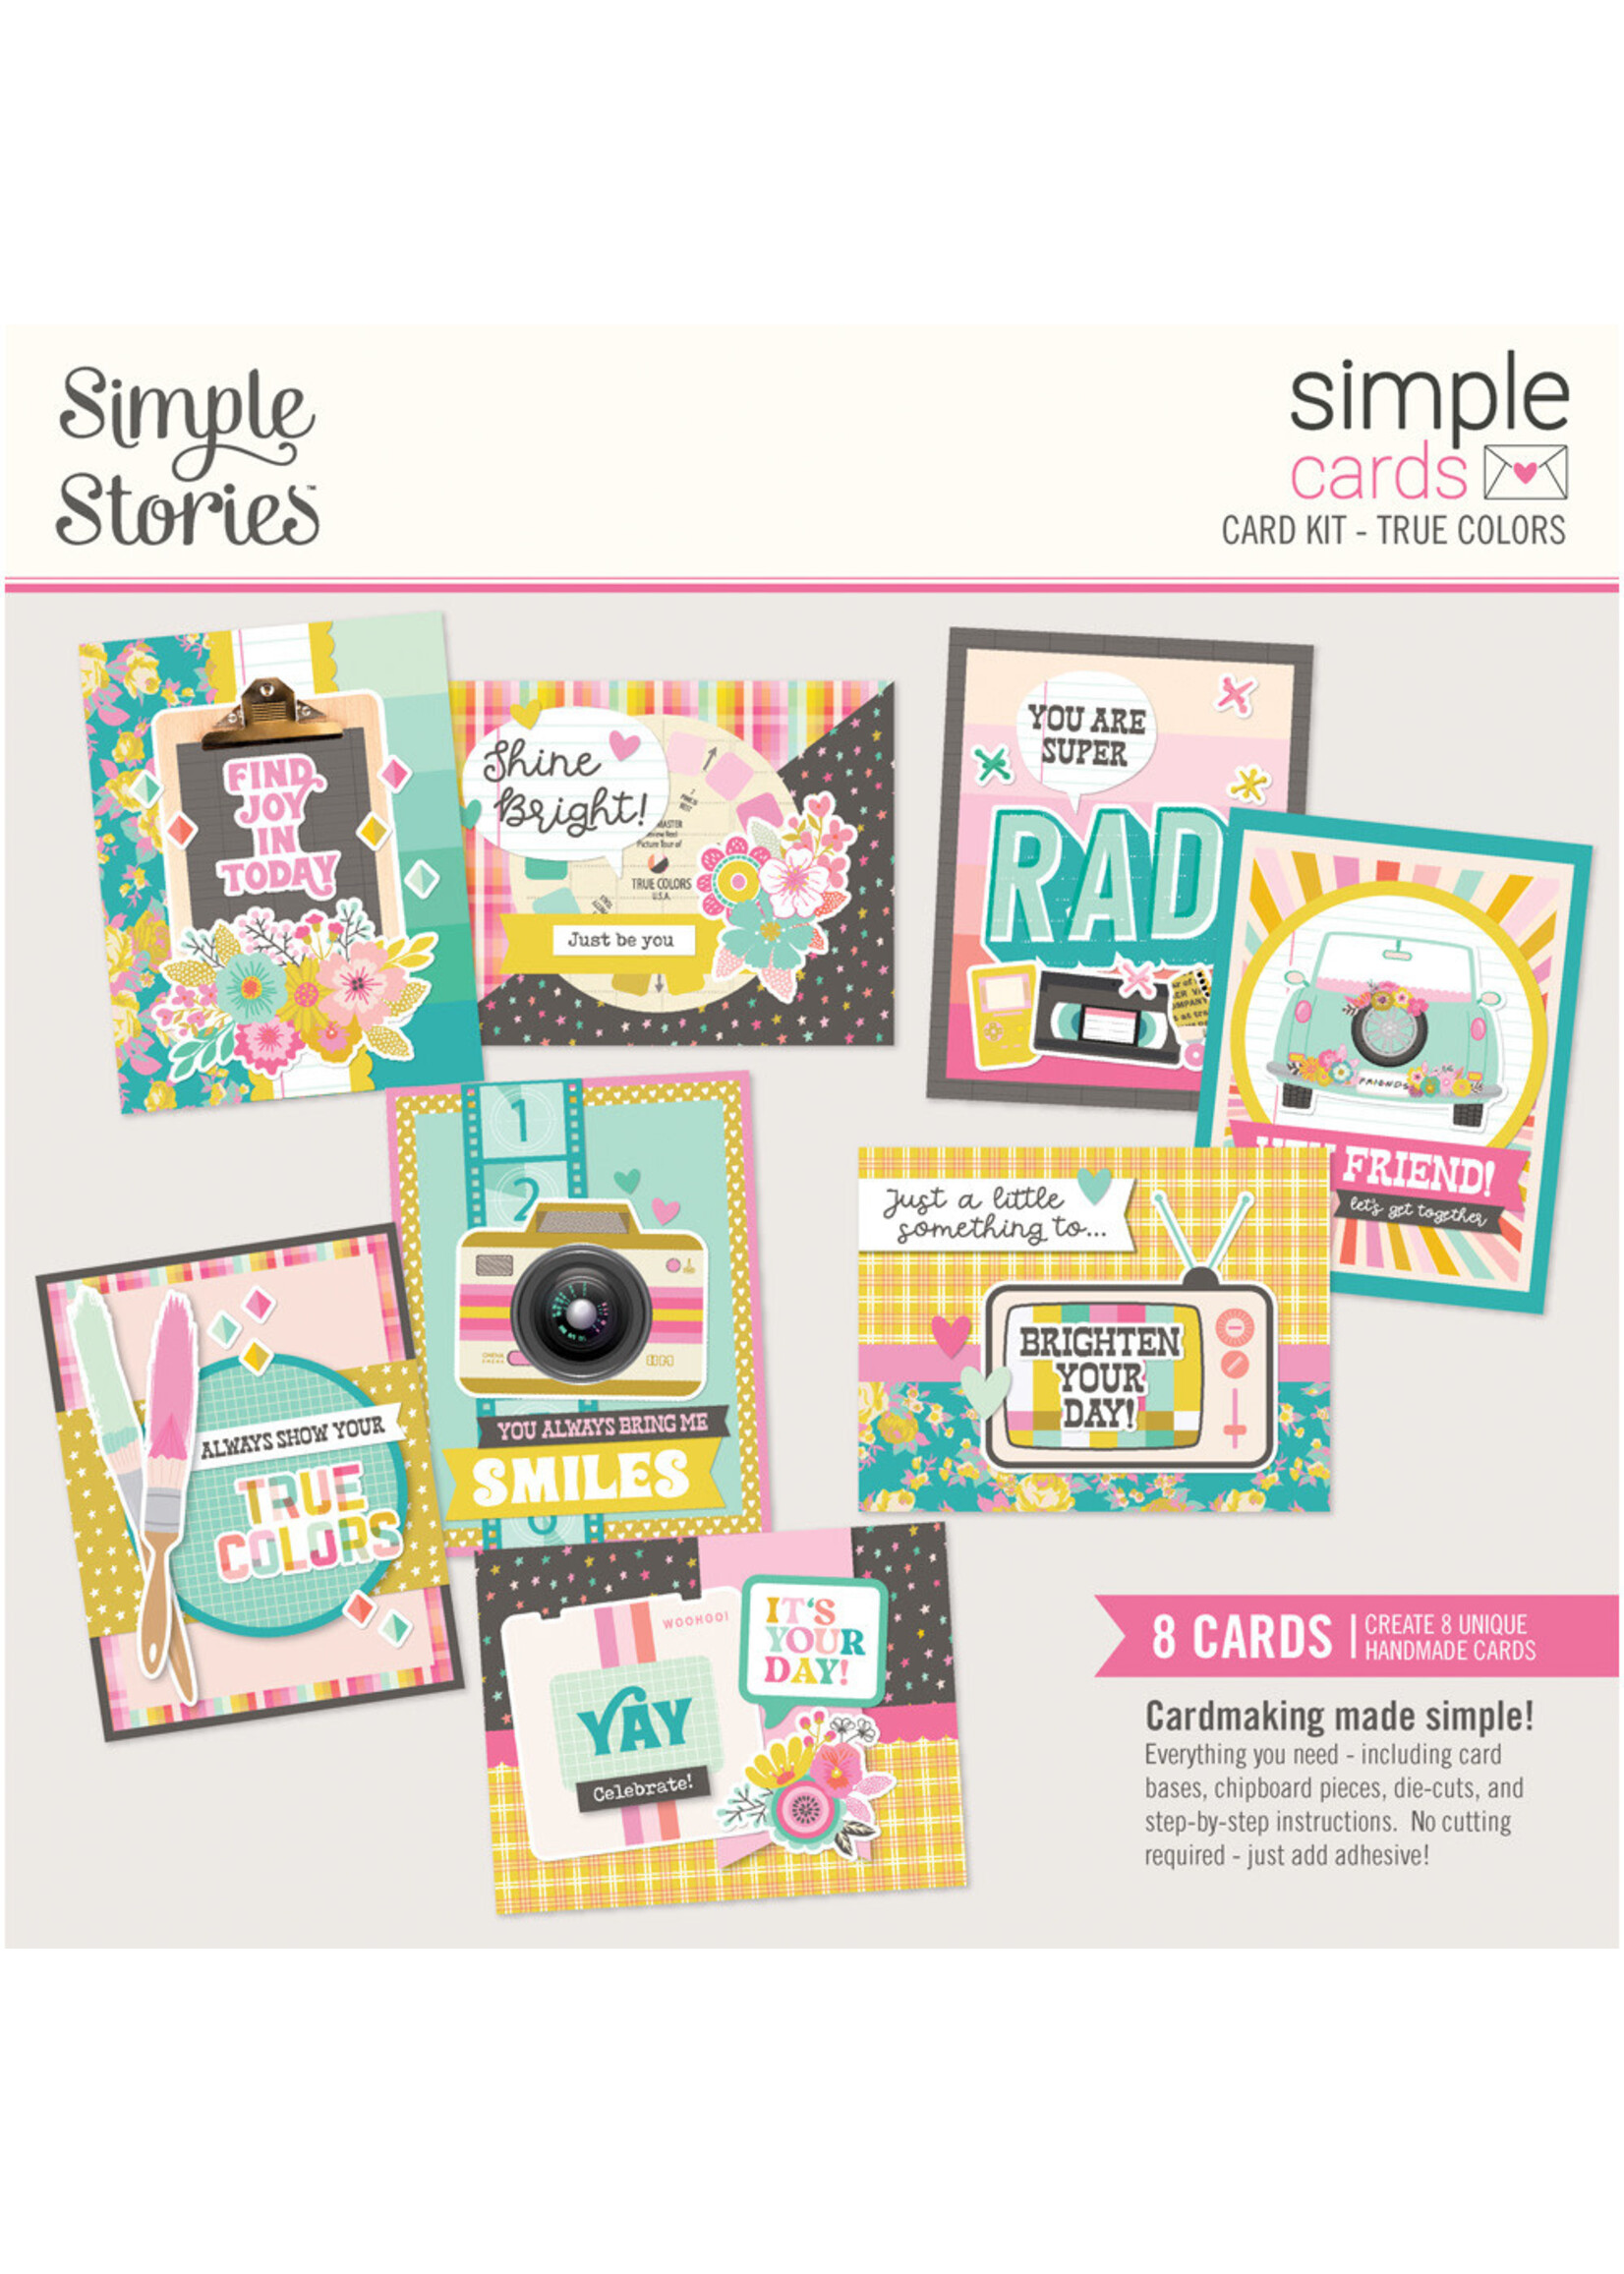 Simple Stories Simple Cards Card Kit, True Colors